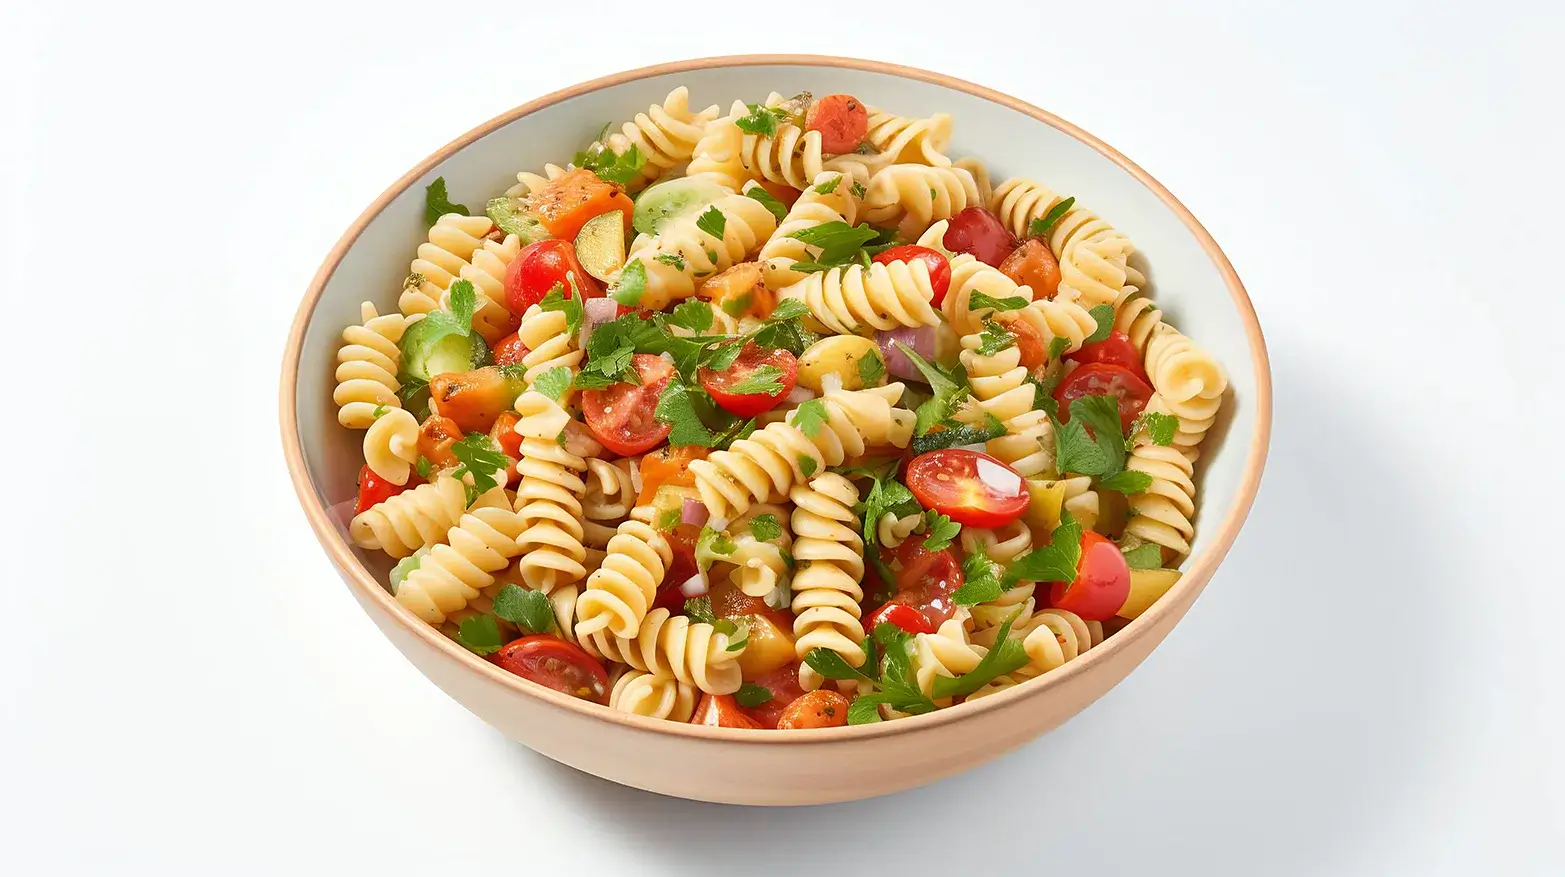 bowl of pasta salad